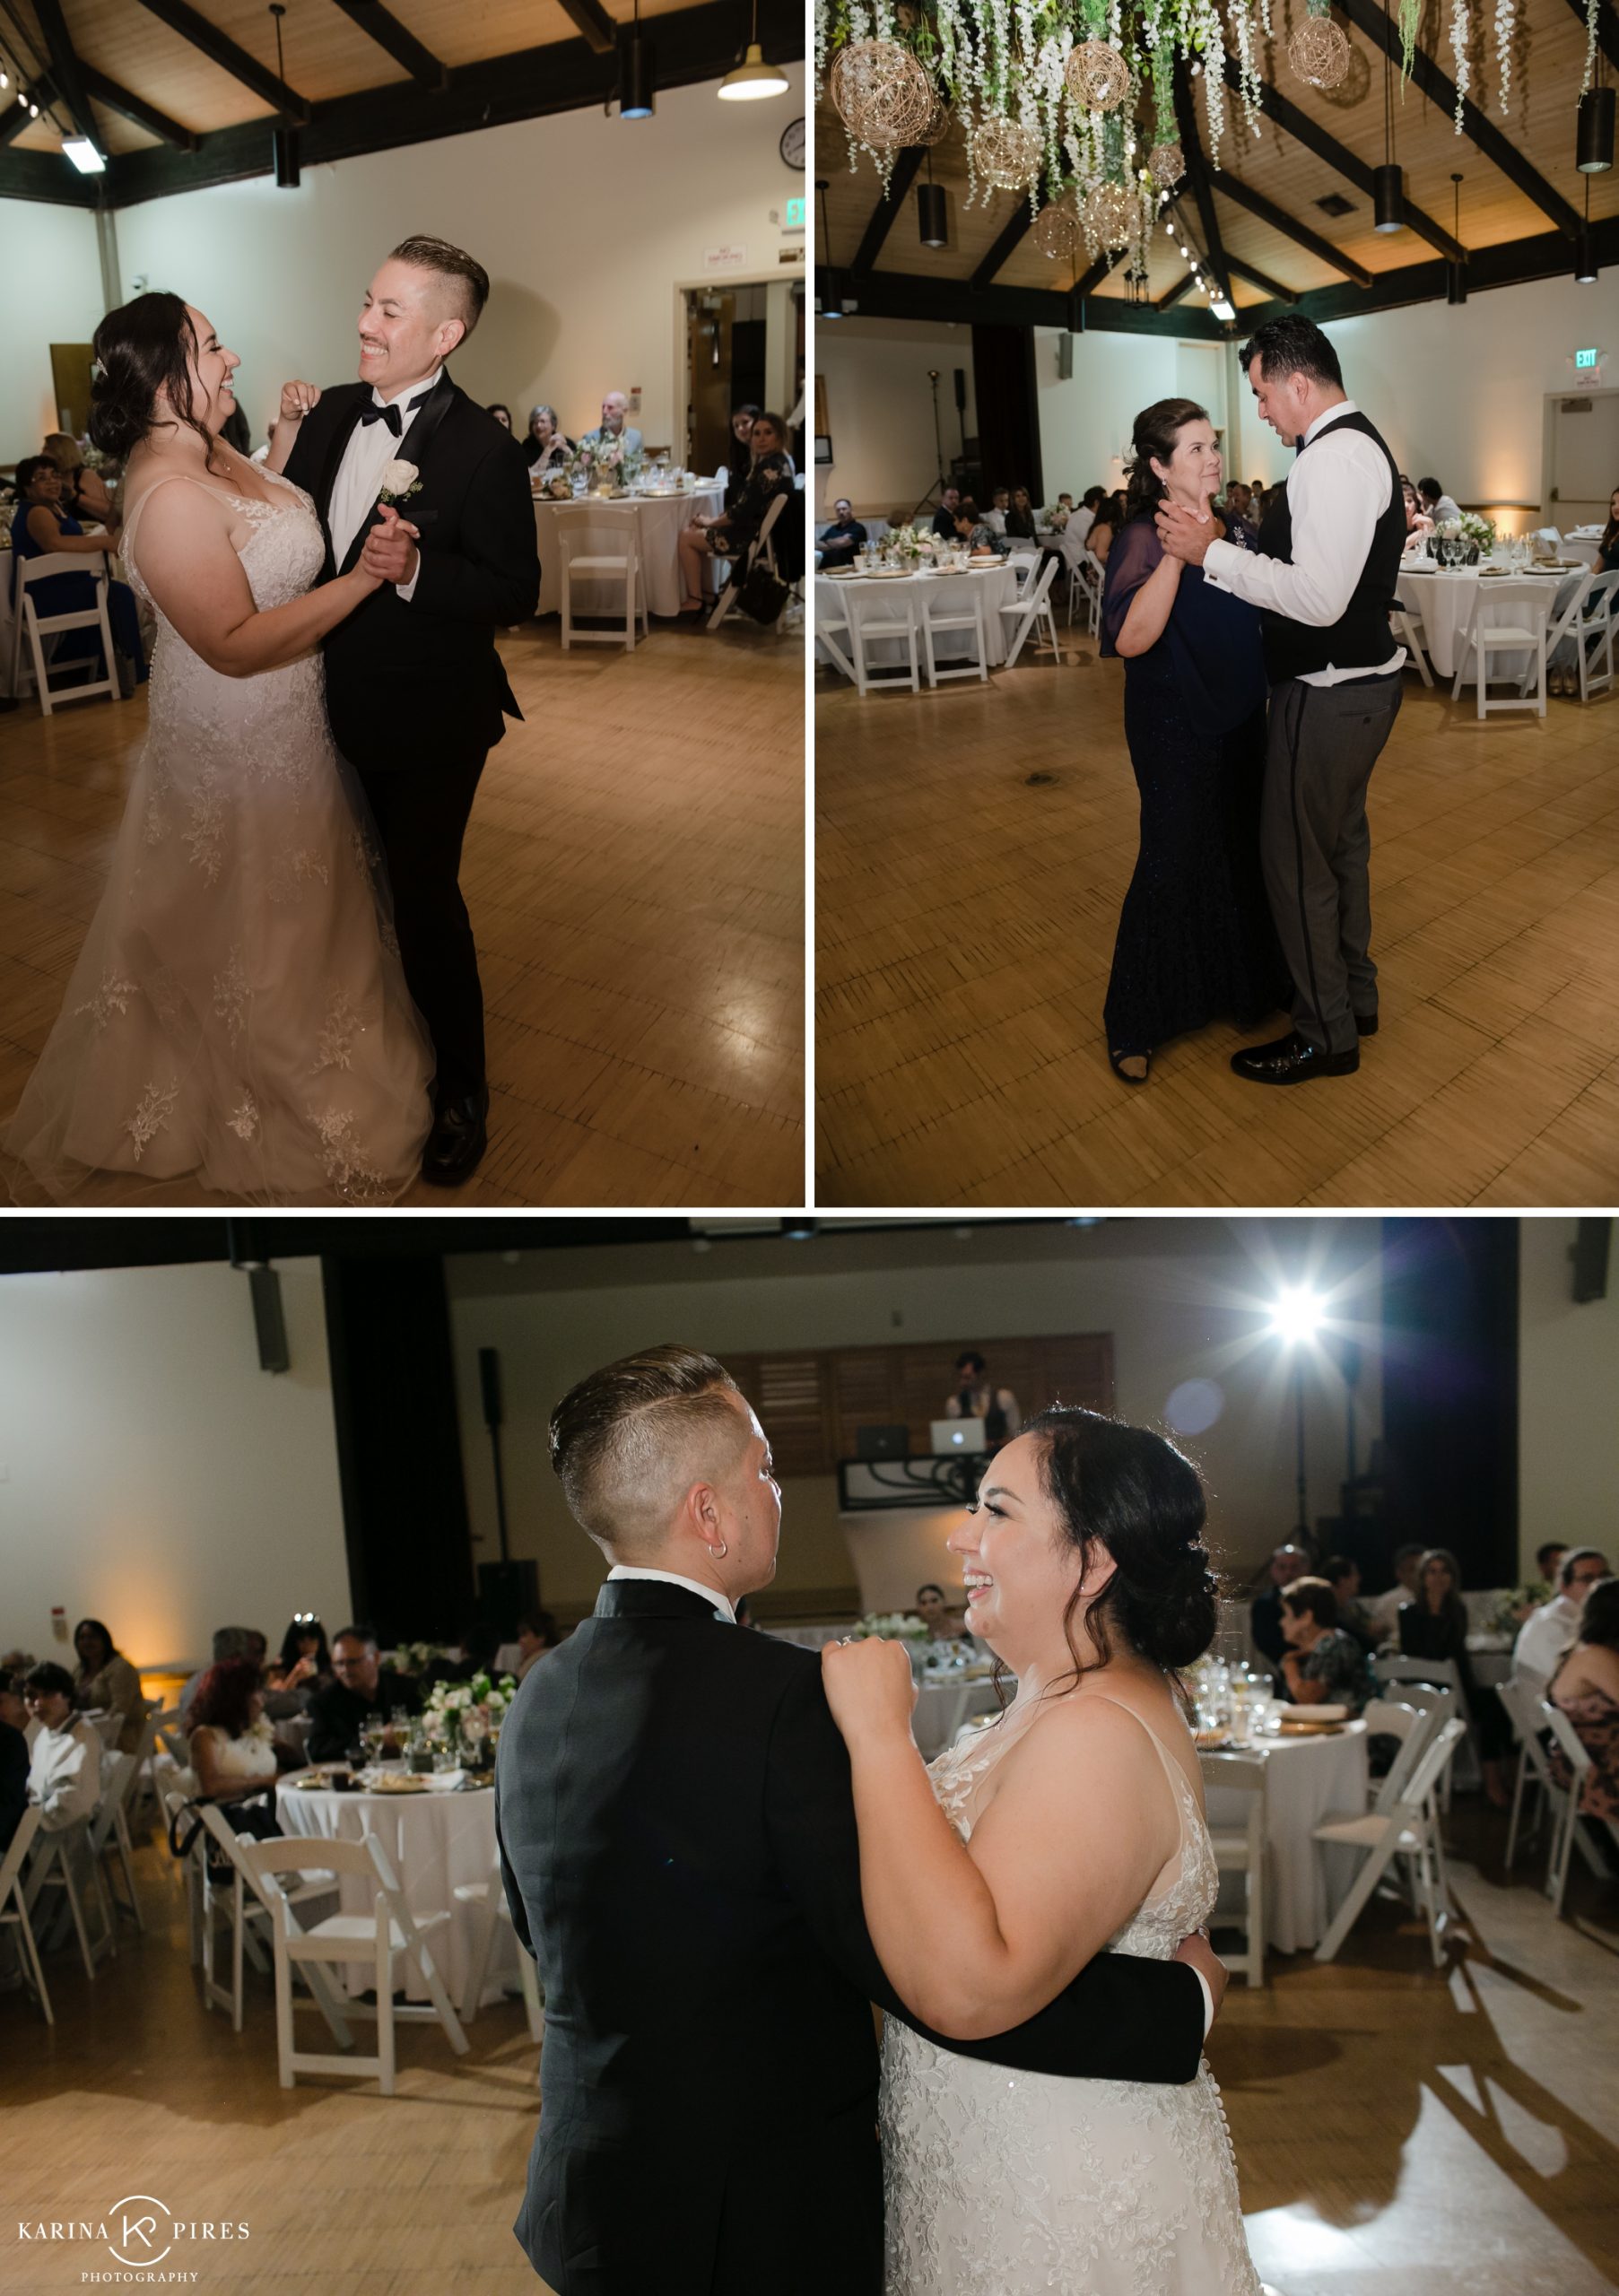 Jennifer and Ronaldo’s wedding reception at the Grace E. Simons Lodge Wedding